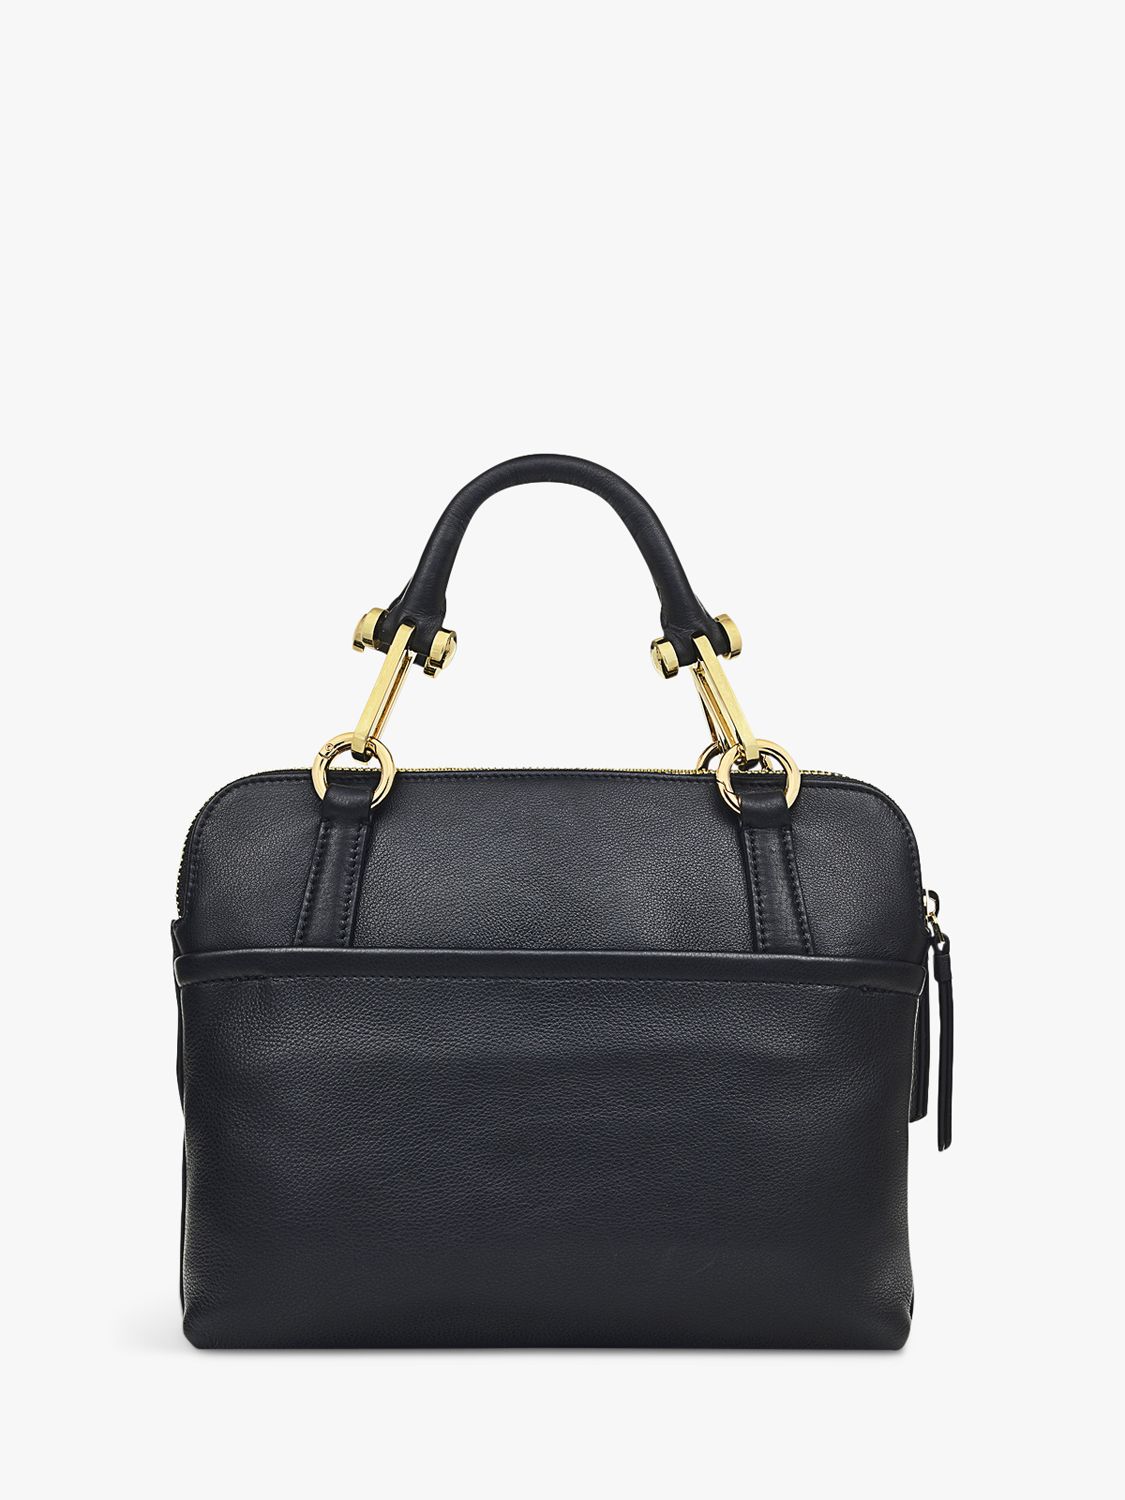 Radley Commute Street Medium Leather Grab Bag, Black, One Size